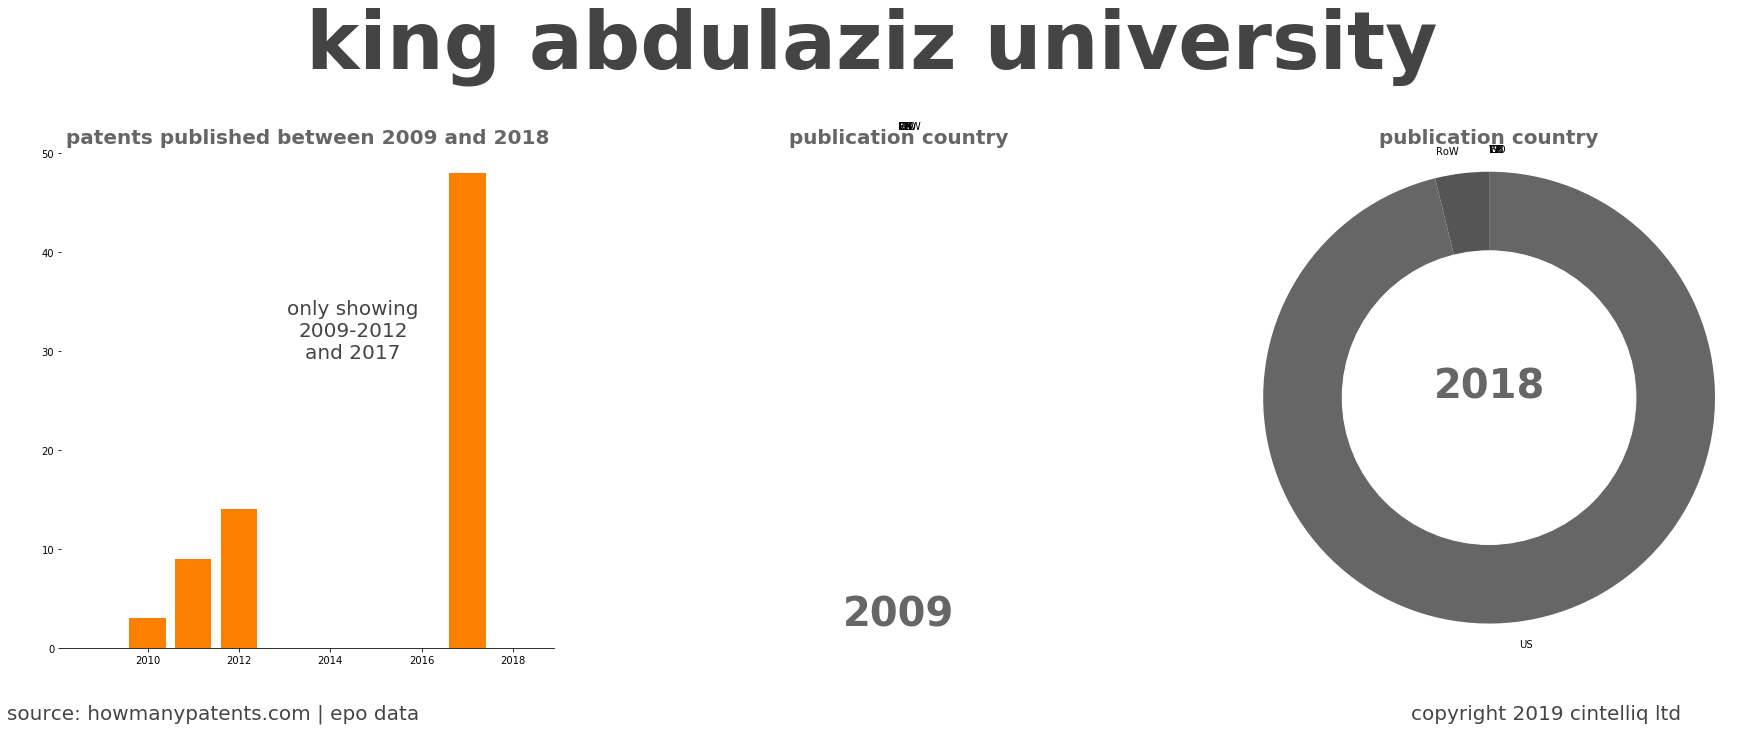 summary of patents for King Abdulaziz University